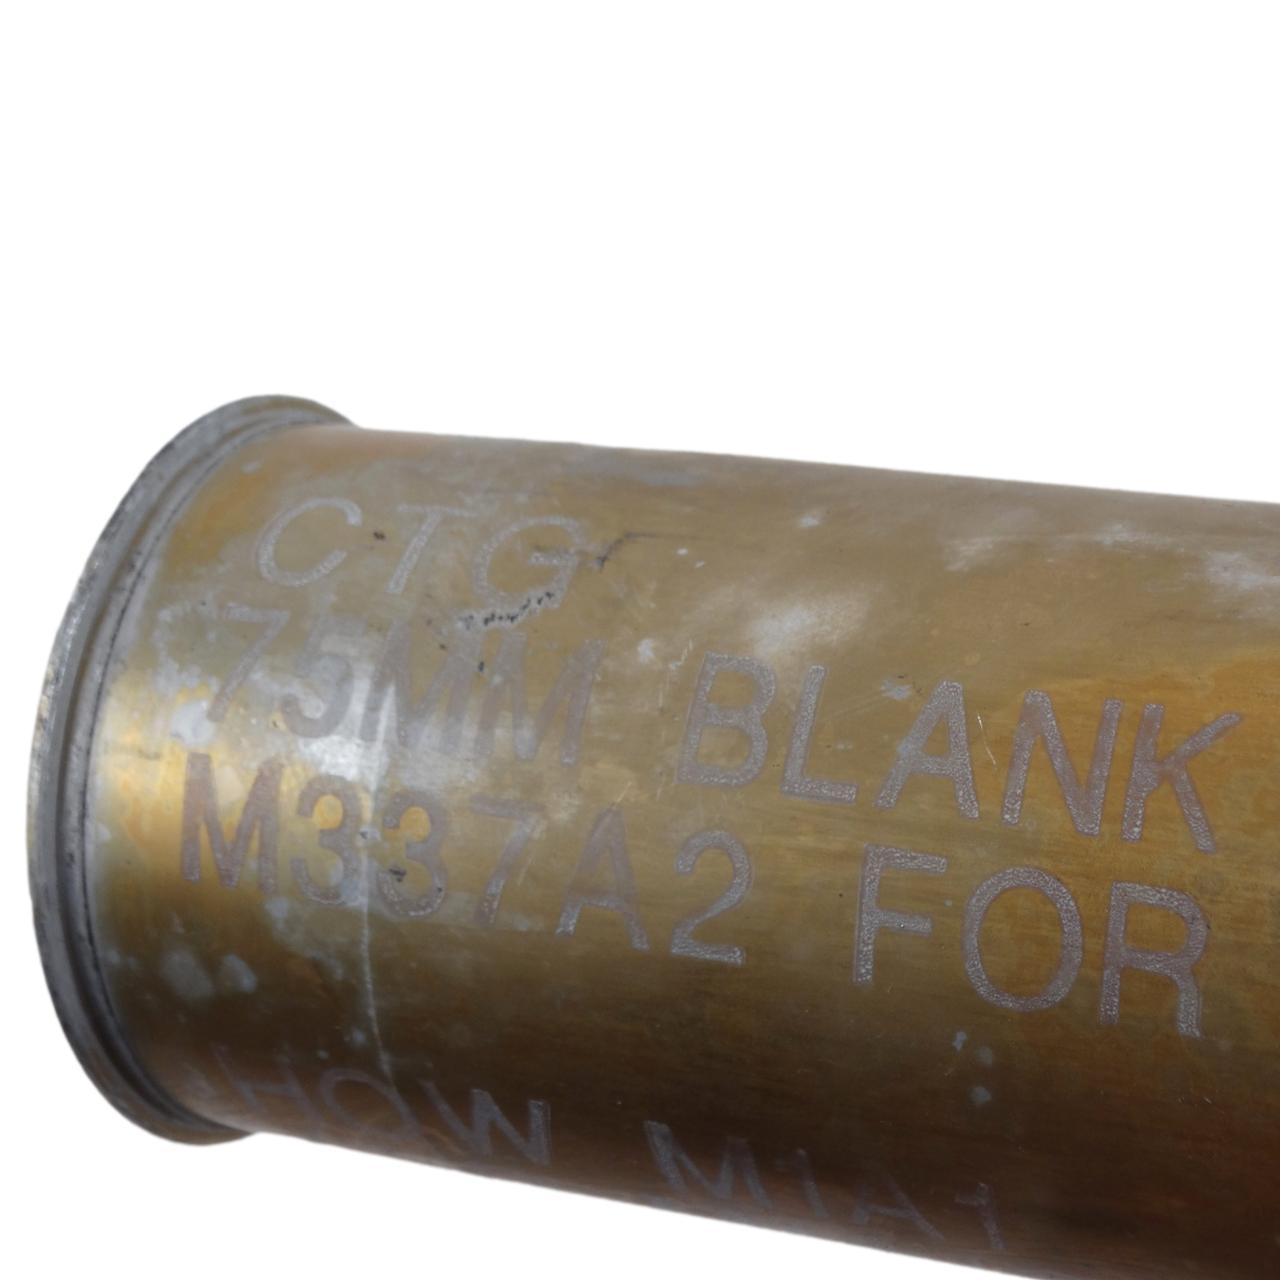 Military brass 76mm shell casing, 57mm bullet, a 48mm bullet, a 3